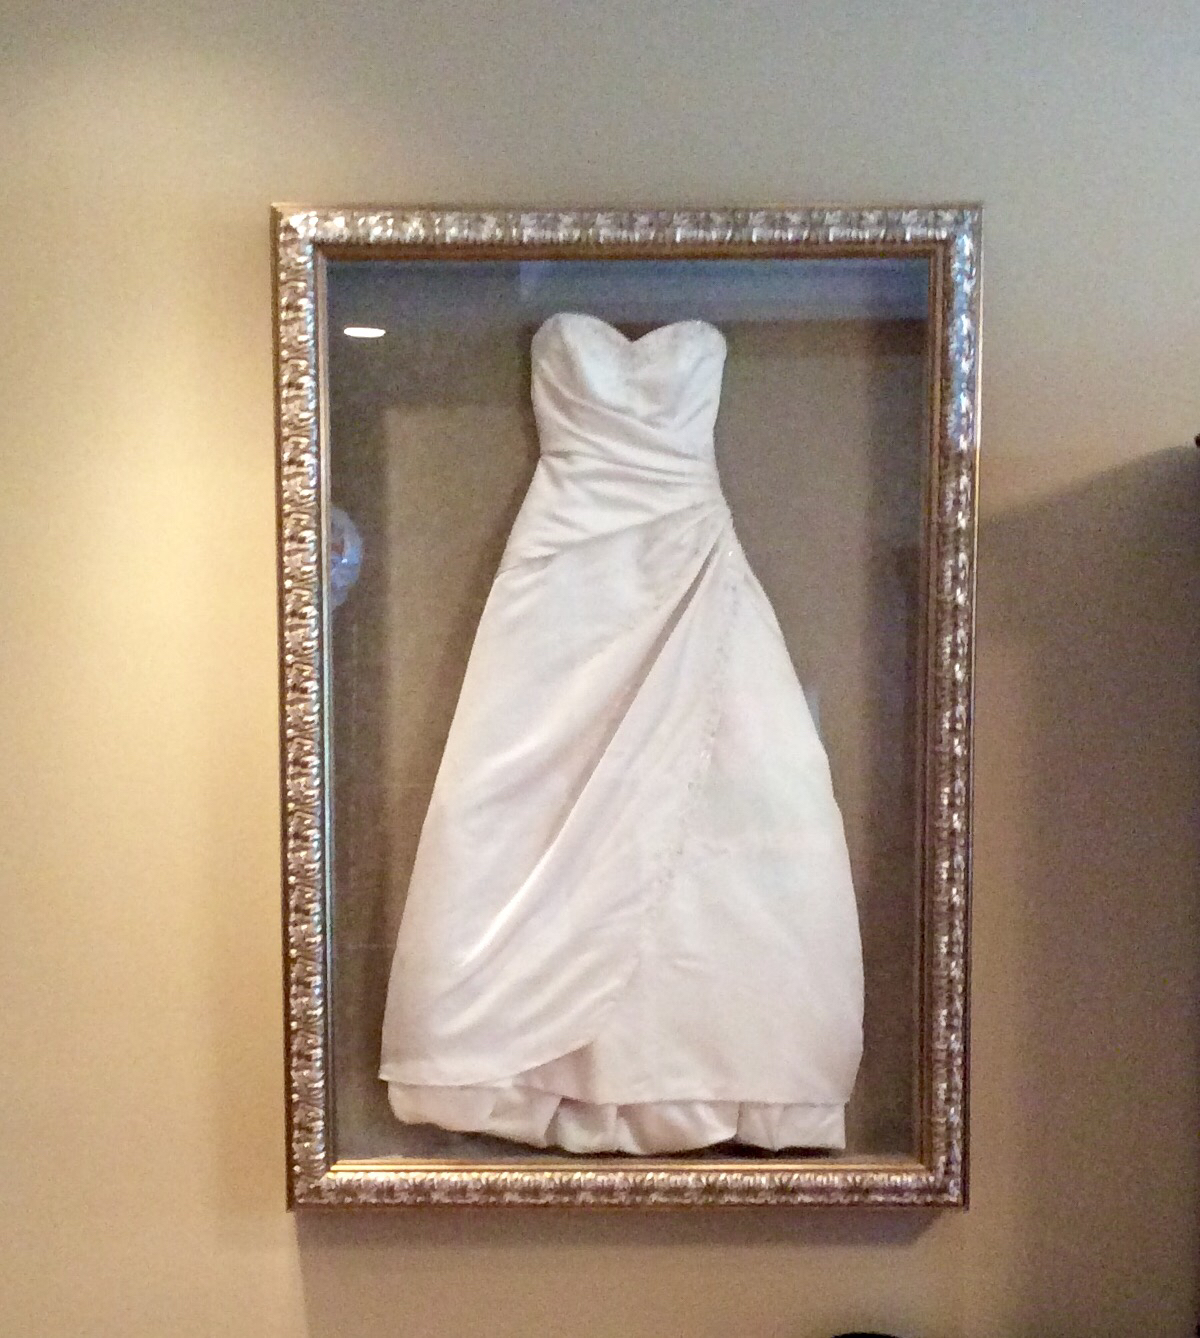 Wedding Dress Frame Ideas To Preserve Your Precious Memories - Page 2 of 2